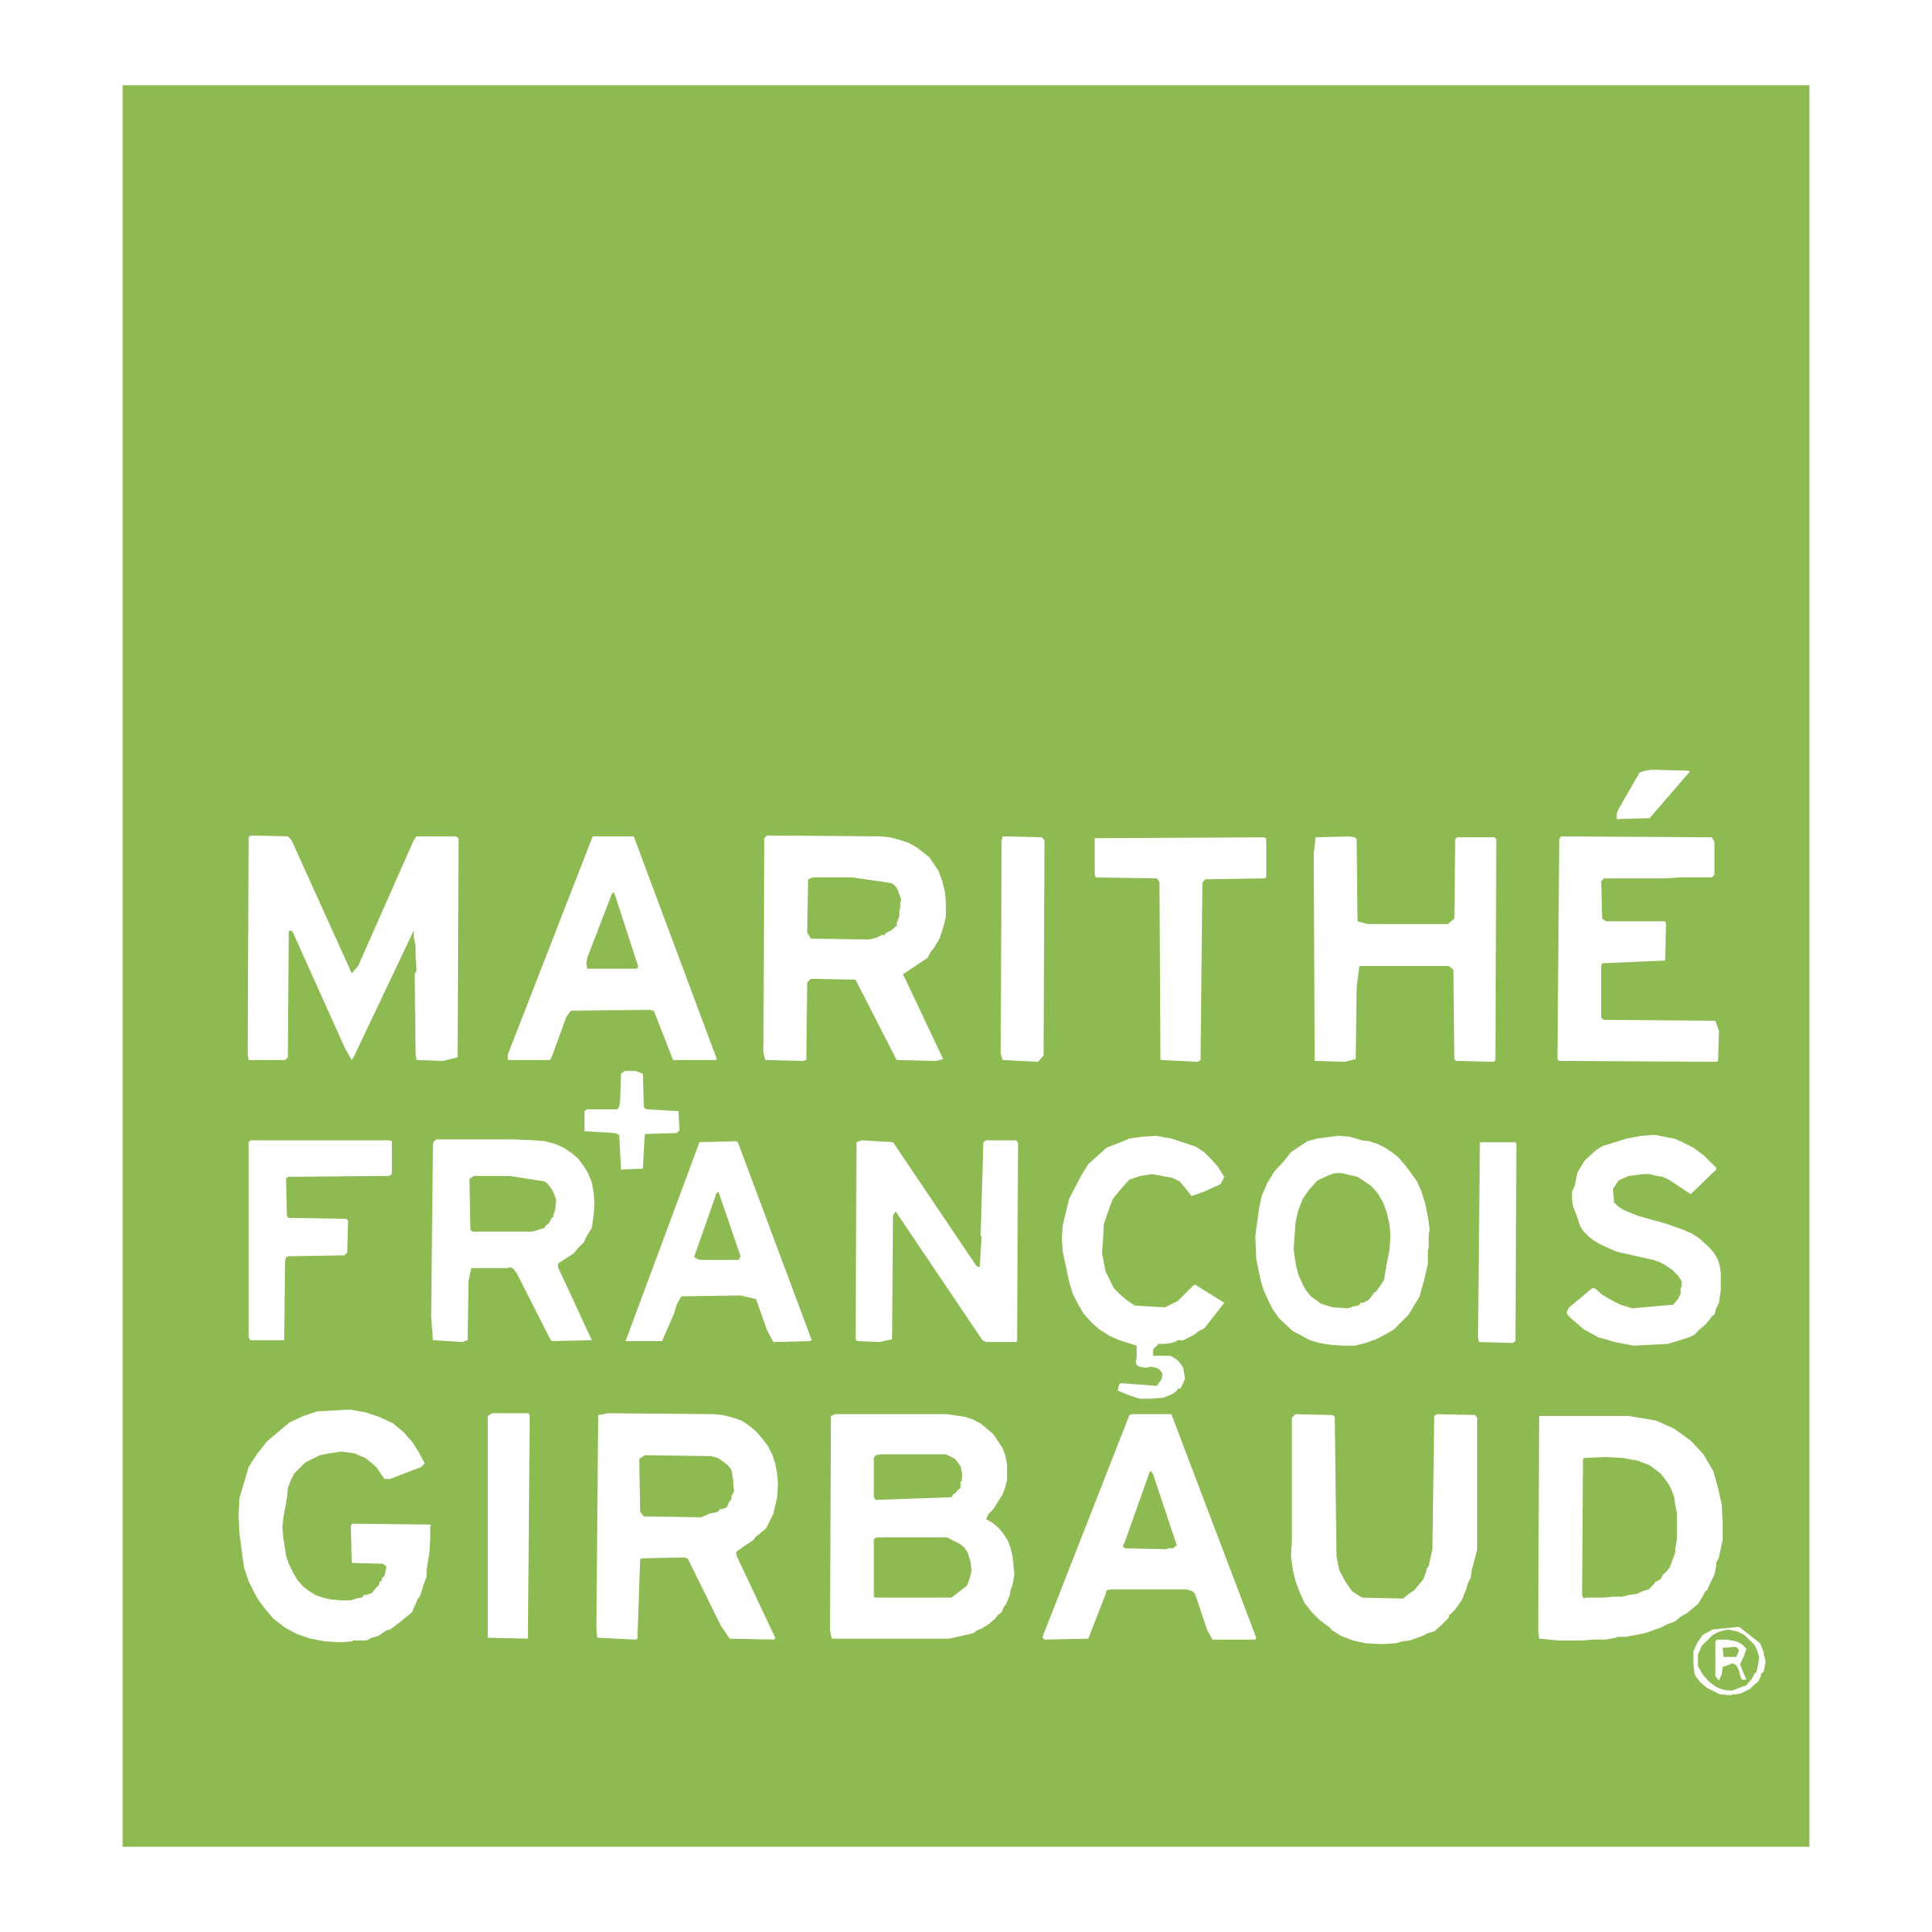 Girbaud Logo - Marithe + Francois Girbaud Logo PNG Transparent & SVG Vector